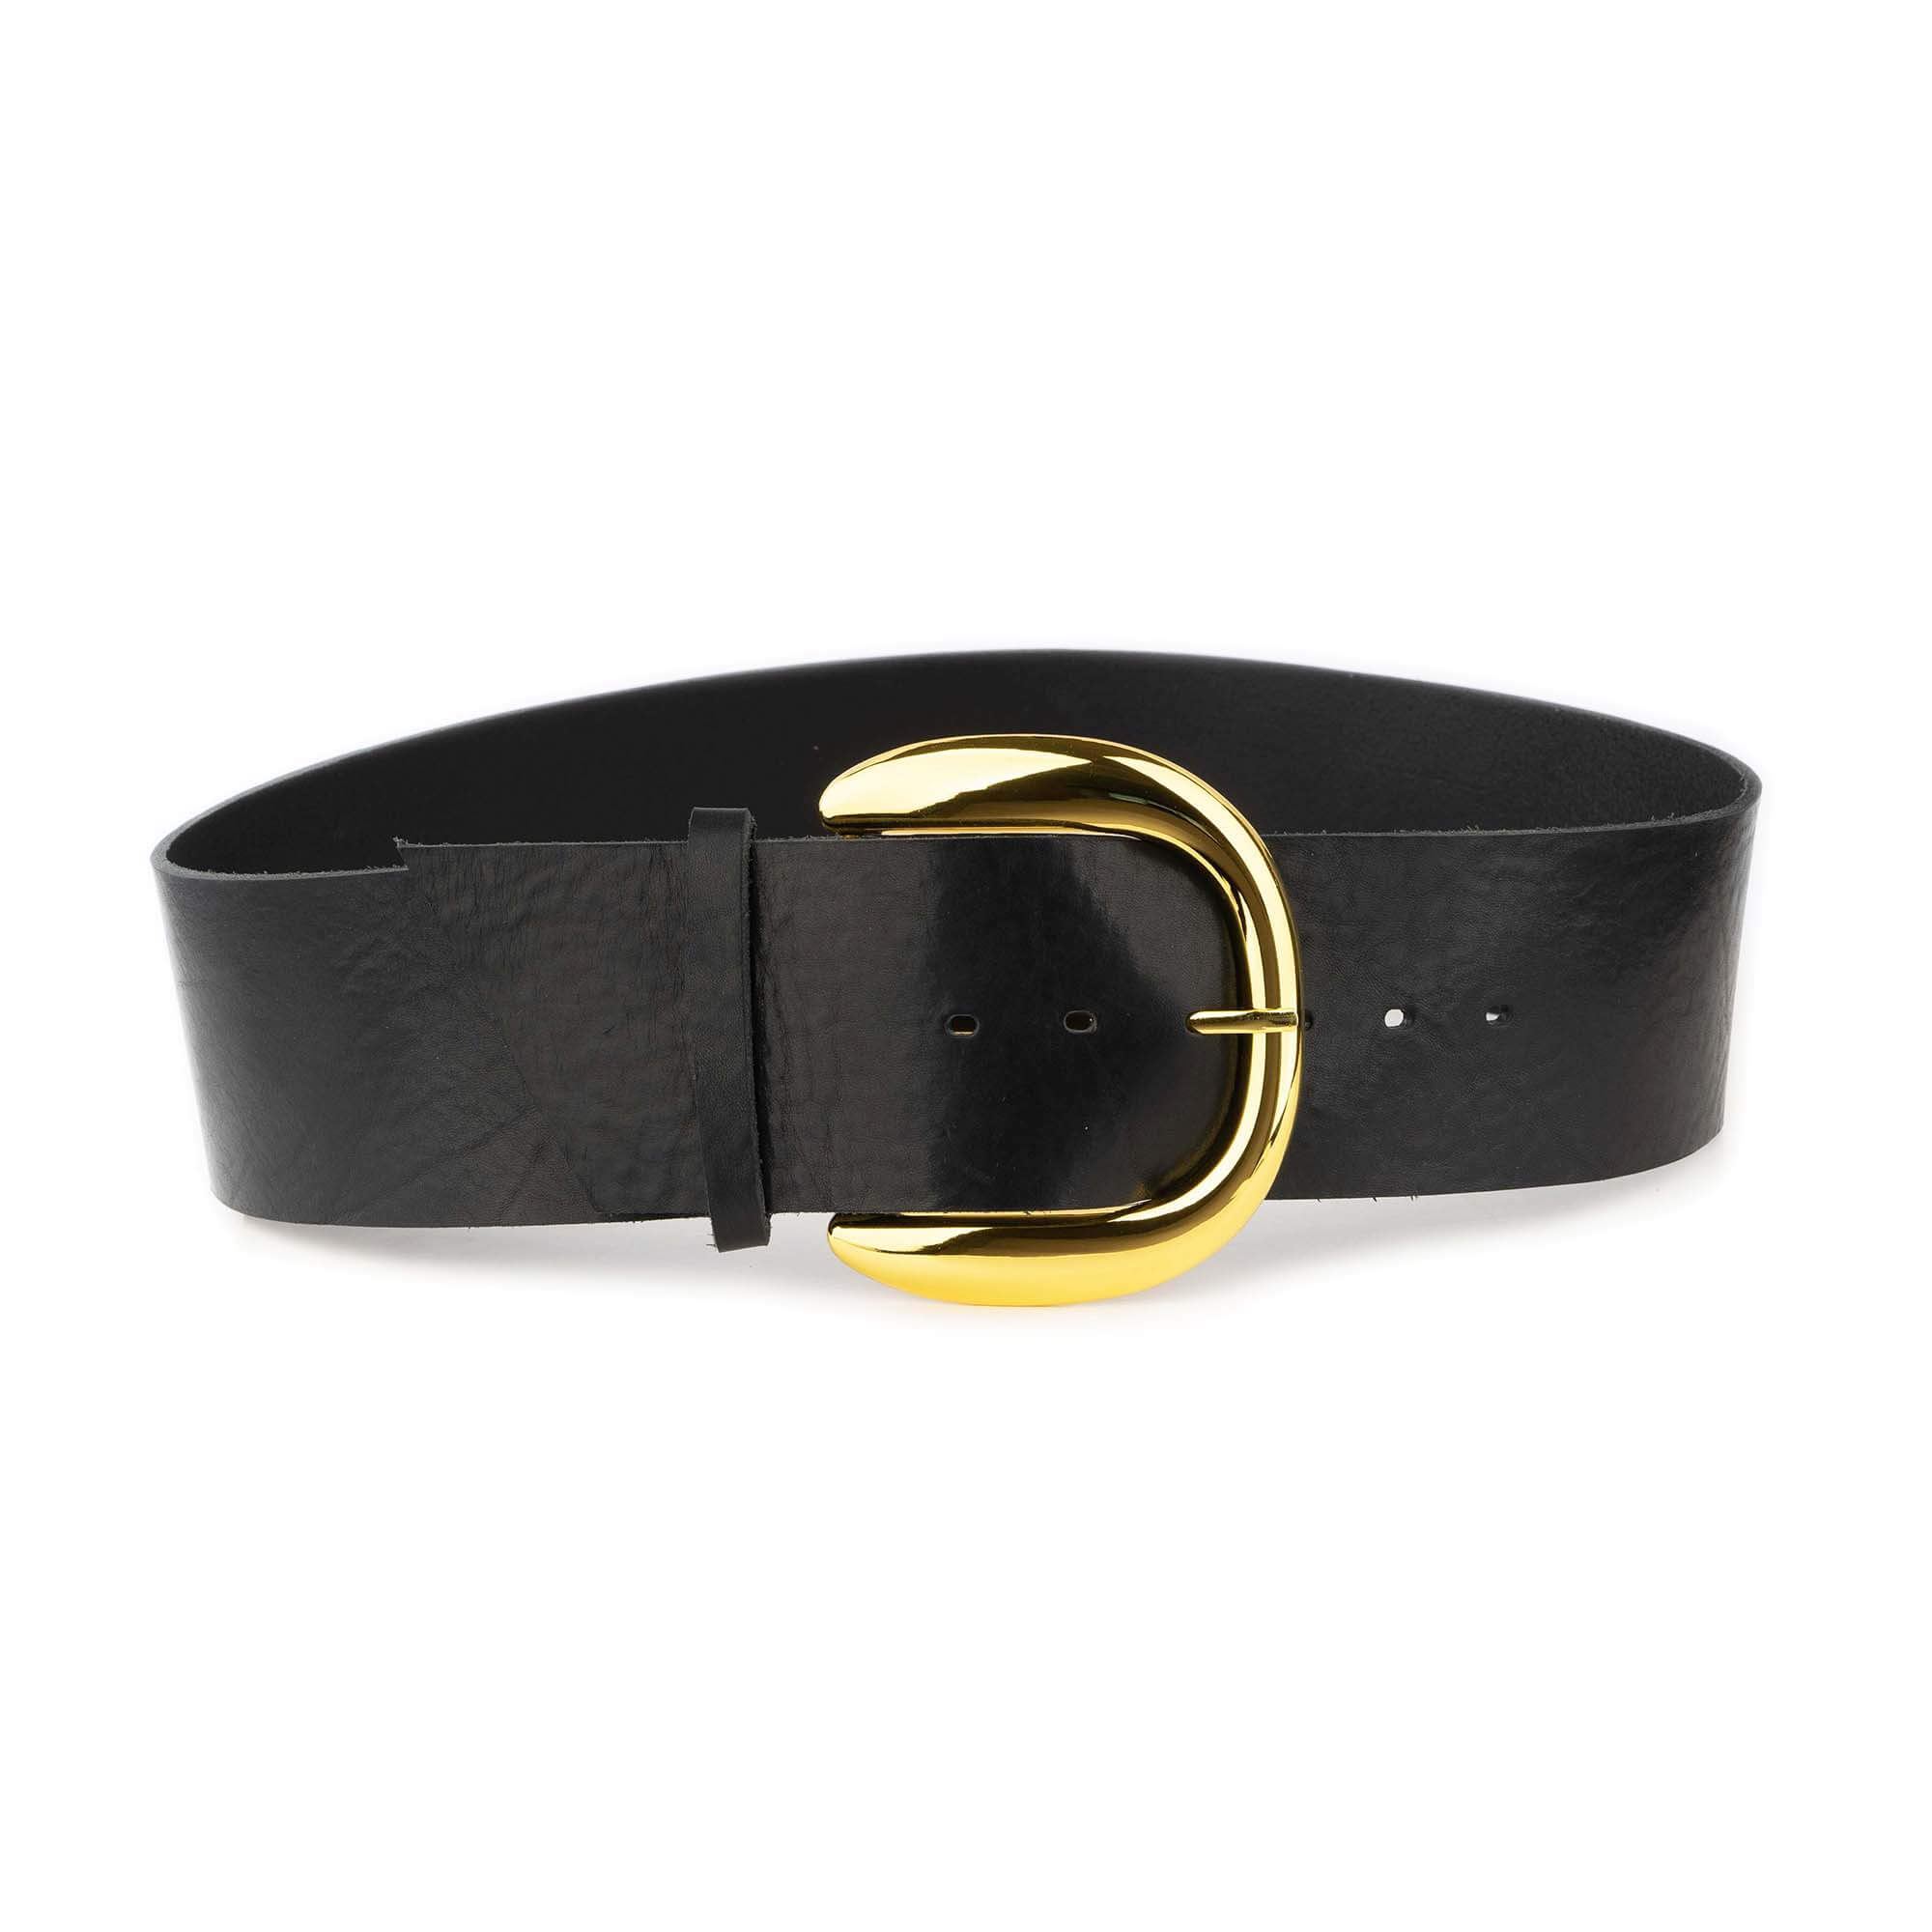 Buy Big Gold Buckle Corset Belt - LeatherBeltsOnline.com